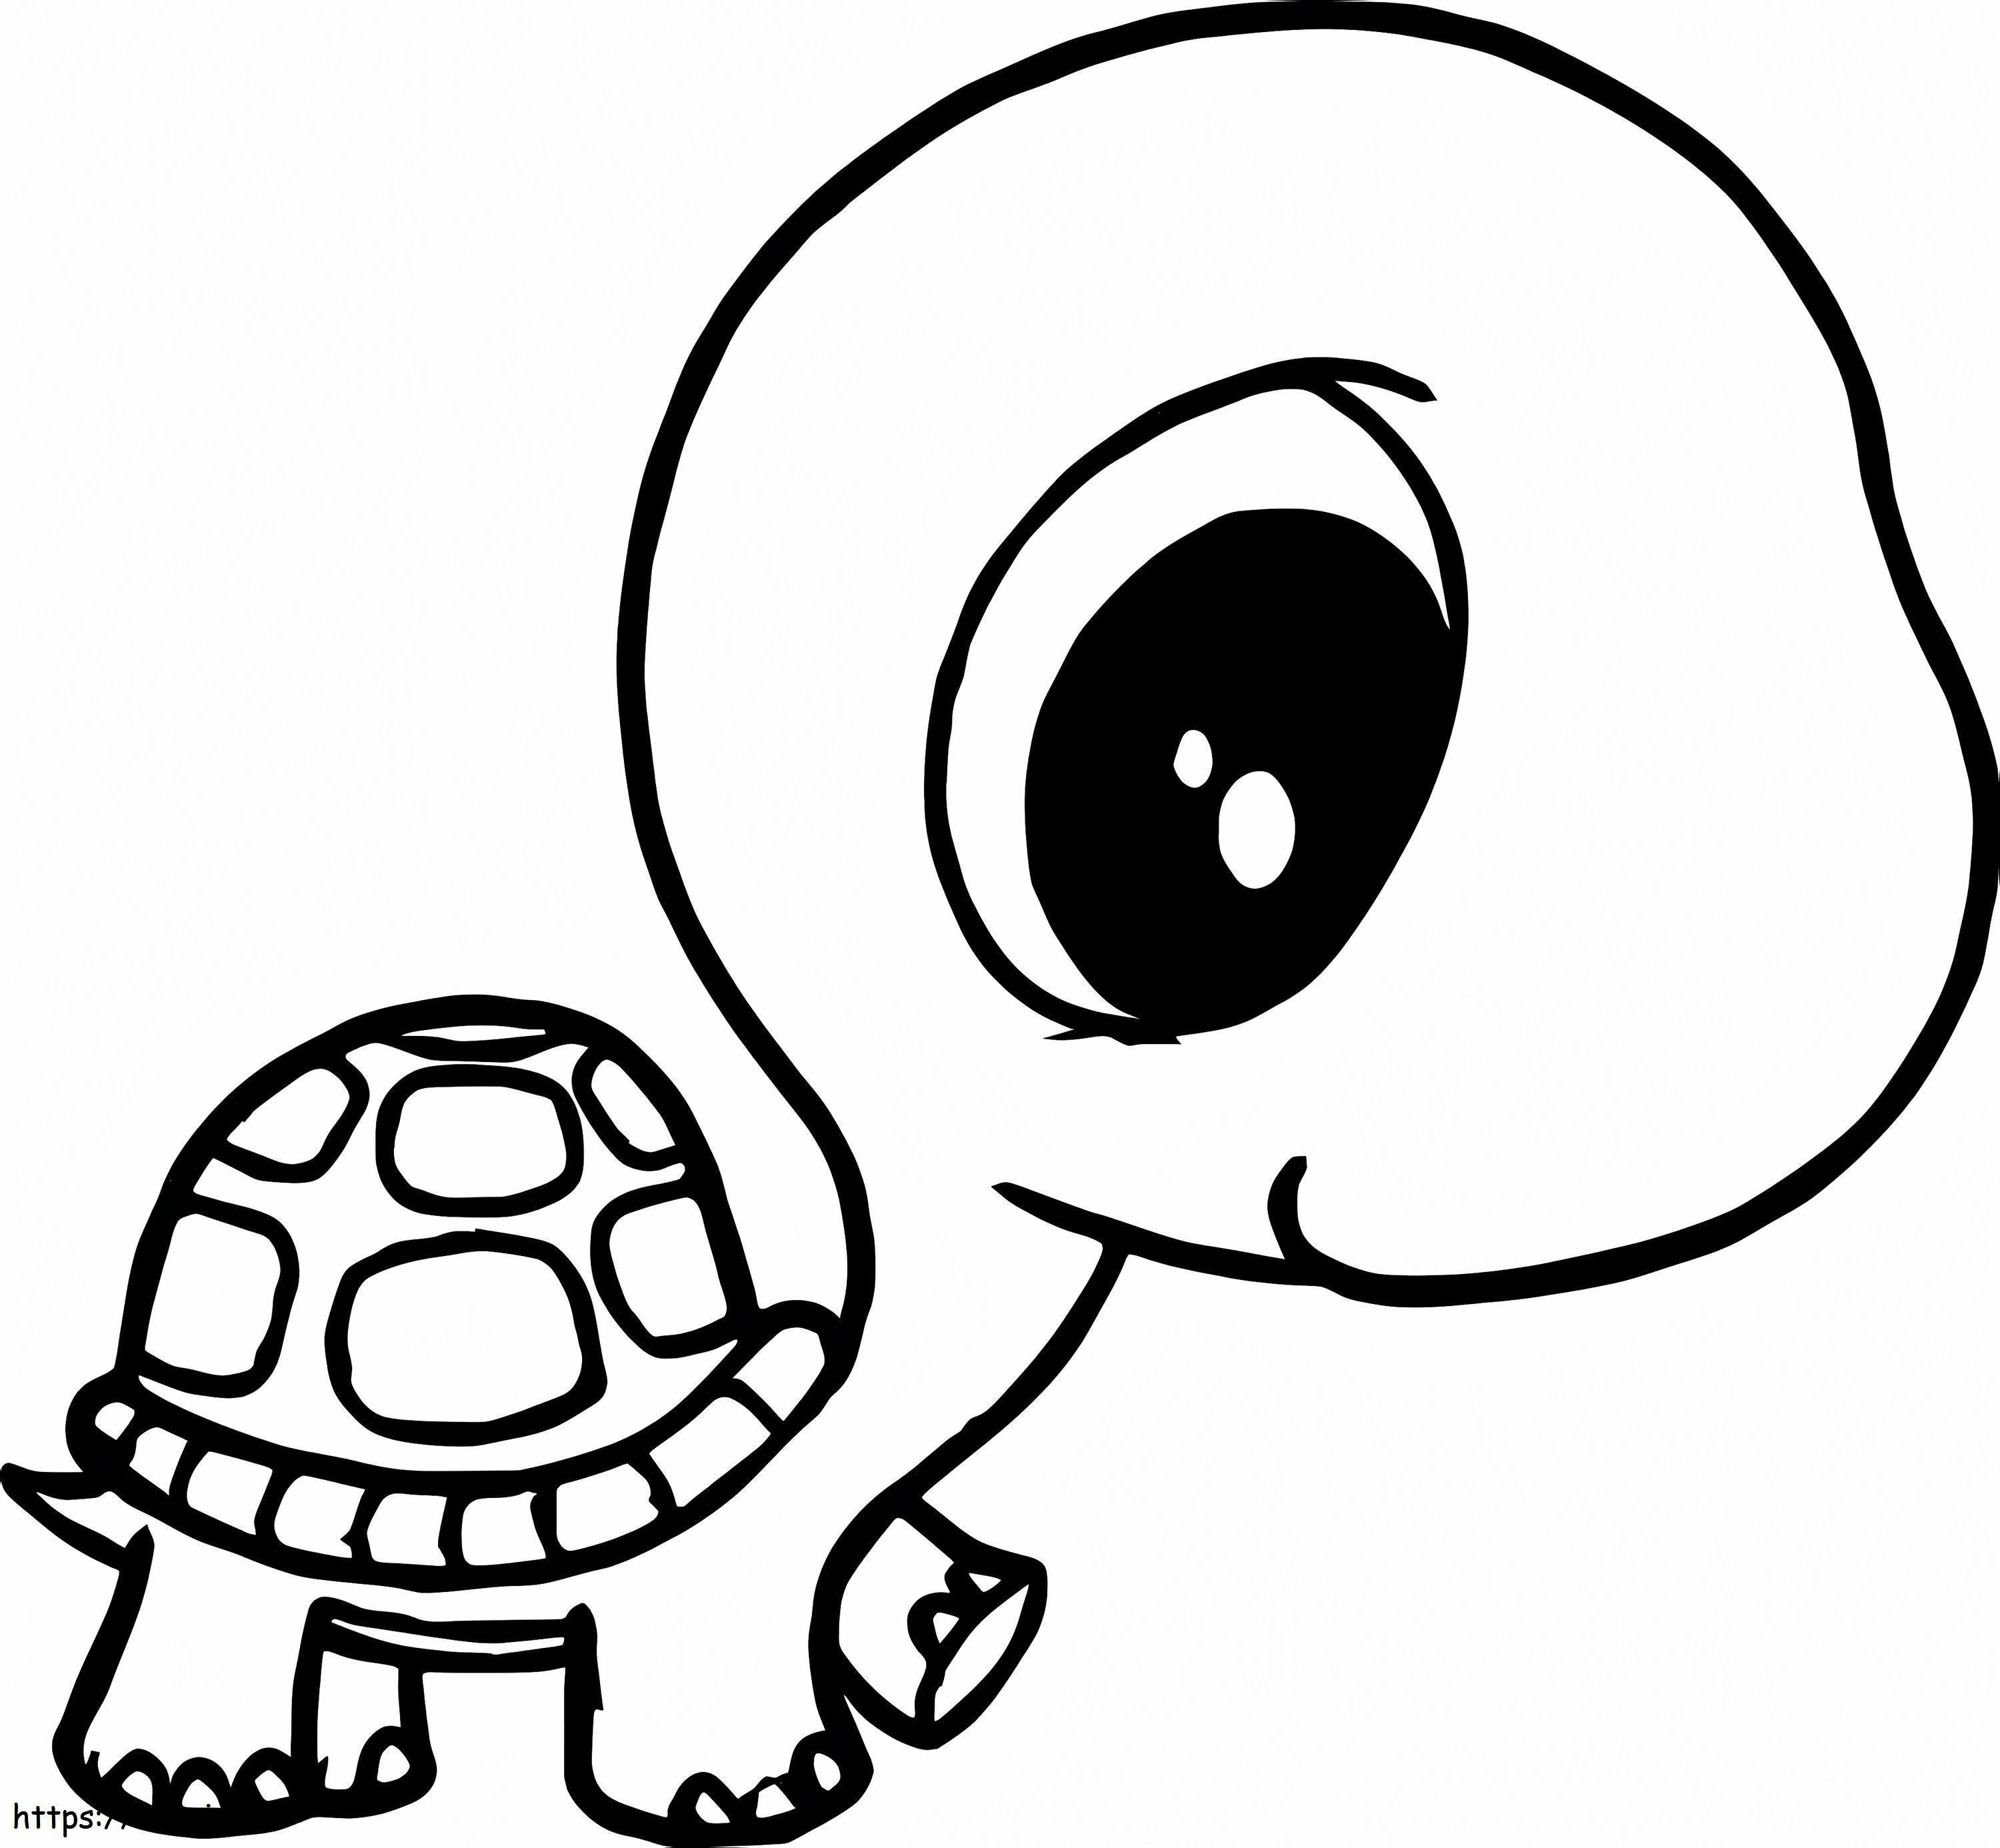 Kawaii-Schildkröte ausmalbilder